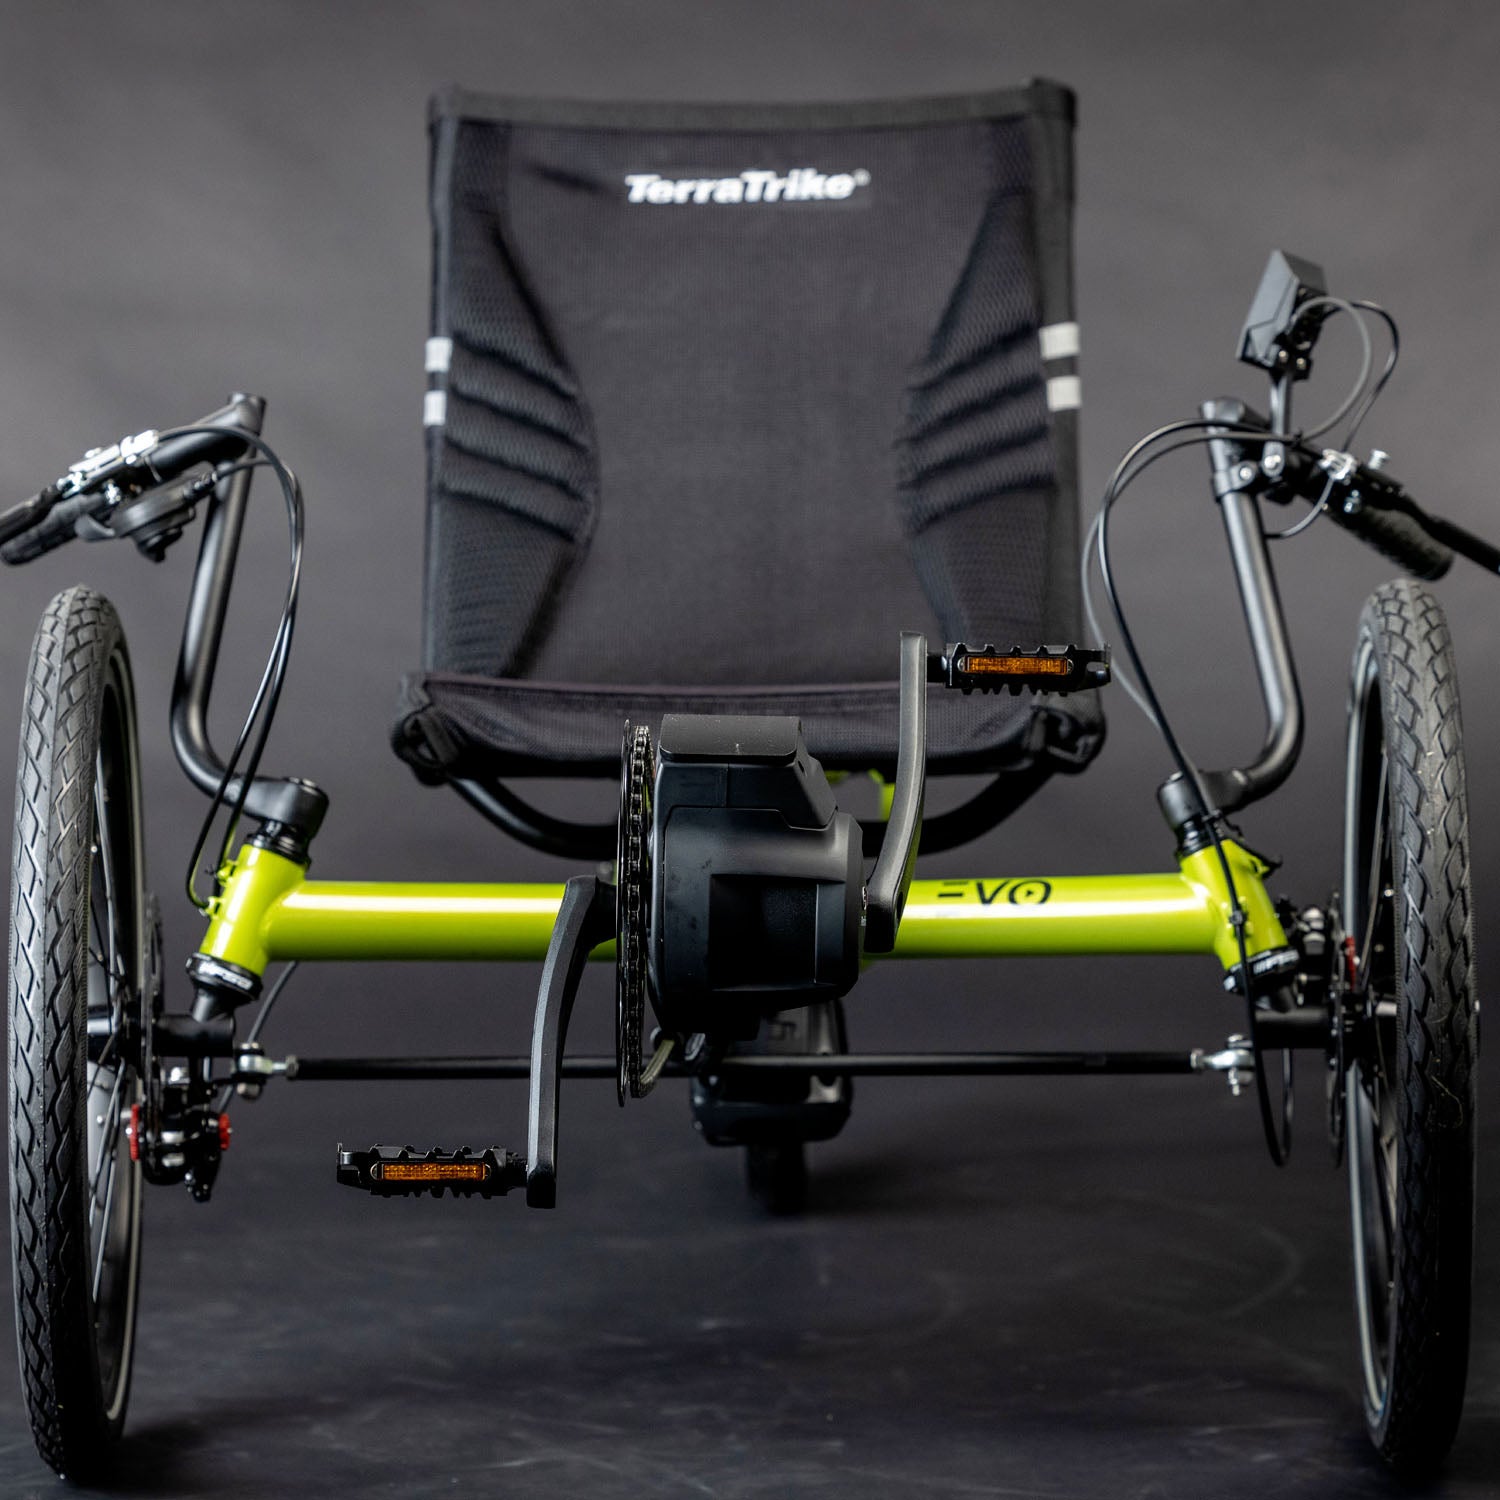 Terra Trike GT EVO > Bosh Motor > 24 Wheel > Electric Green, bixbybicycles.com